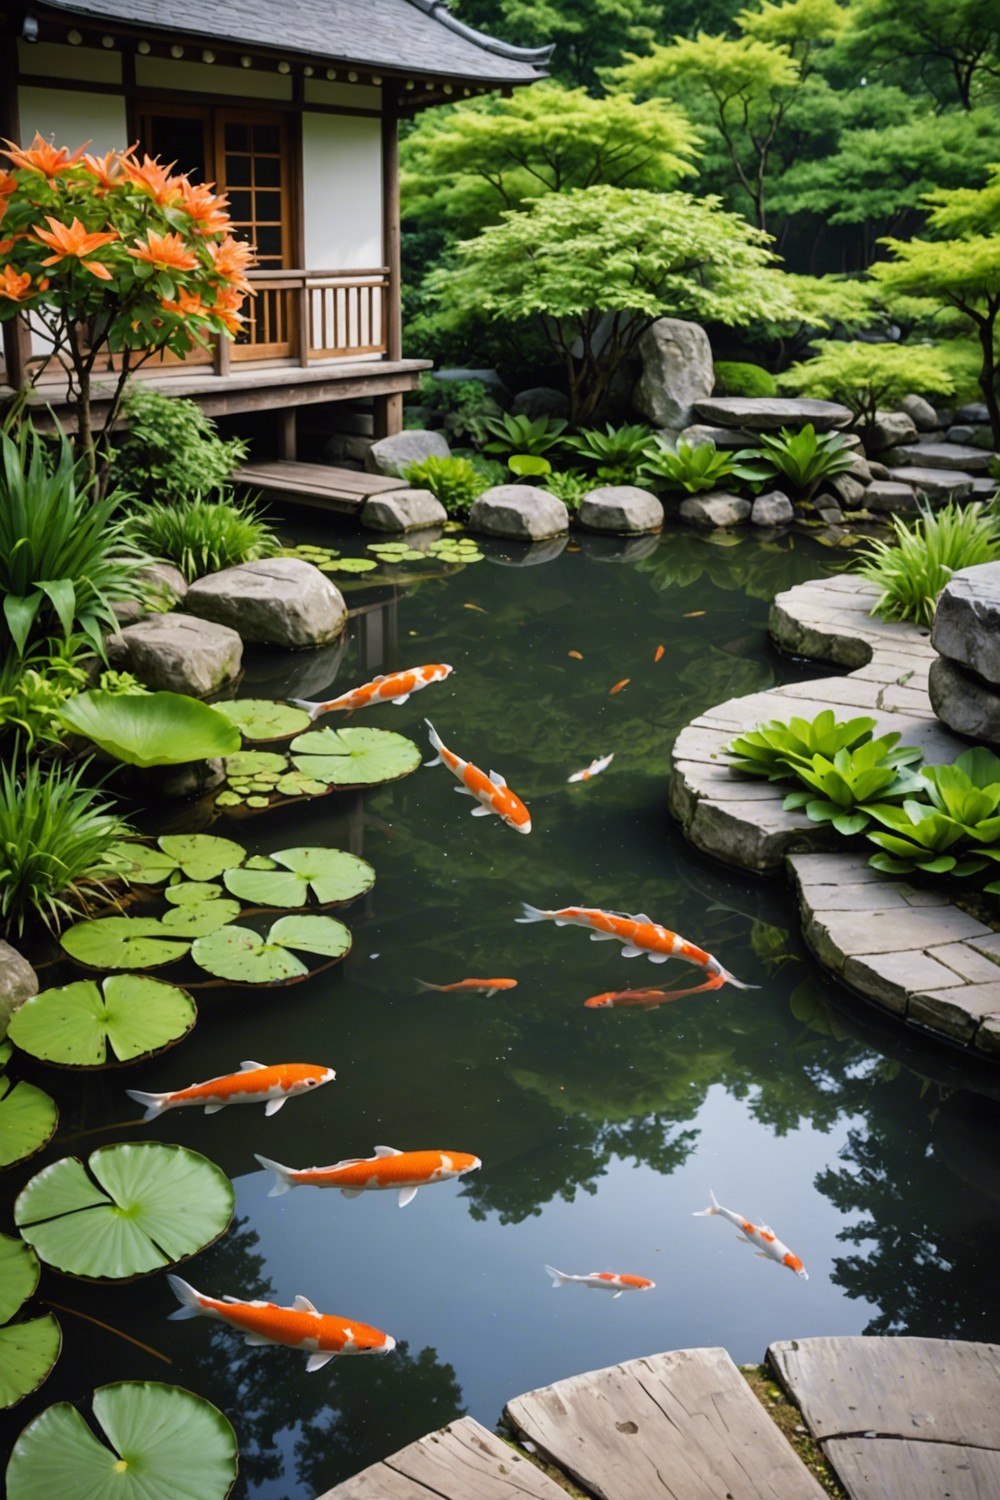 Peaceful Pond and Koi Fish